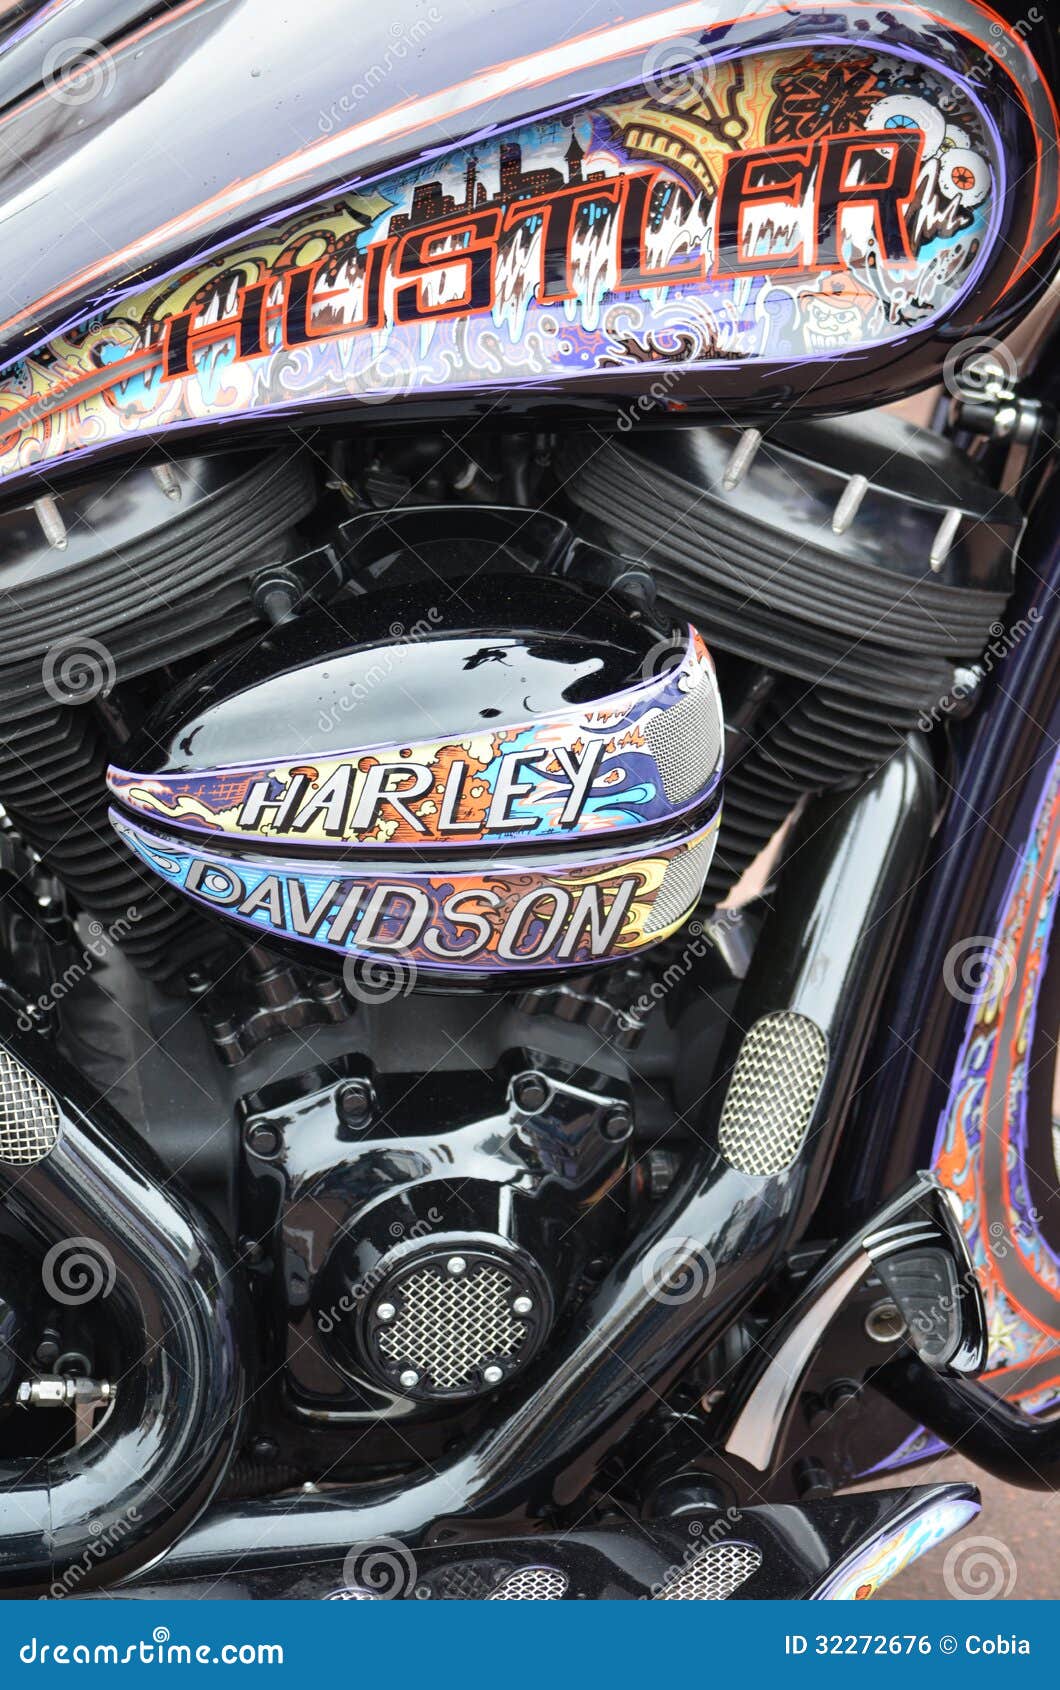 Harley Davidson Custom Built Motorcycle Editorial Photo Image Of Gang Davidson 32272676